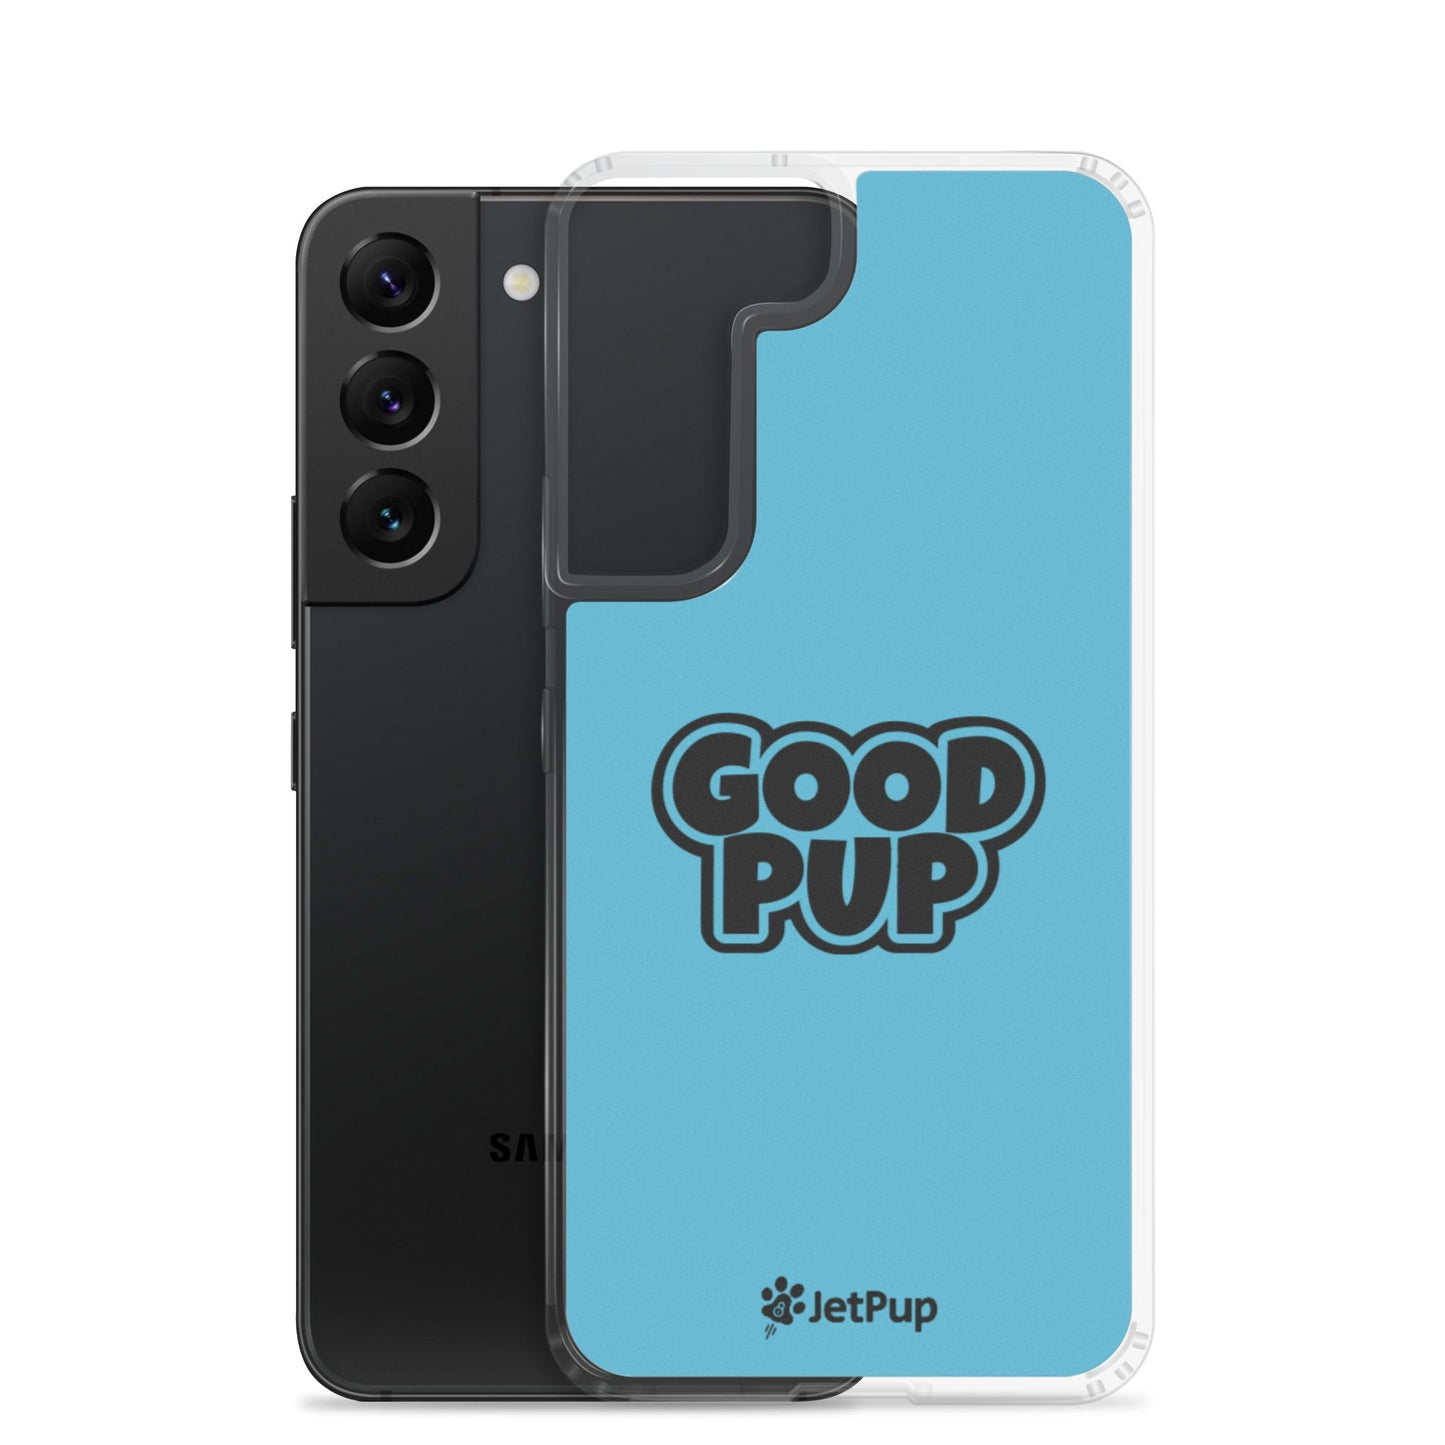 Good Pup Samsung Case - Sky Blue - JetPup